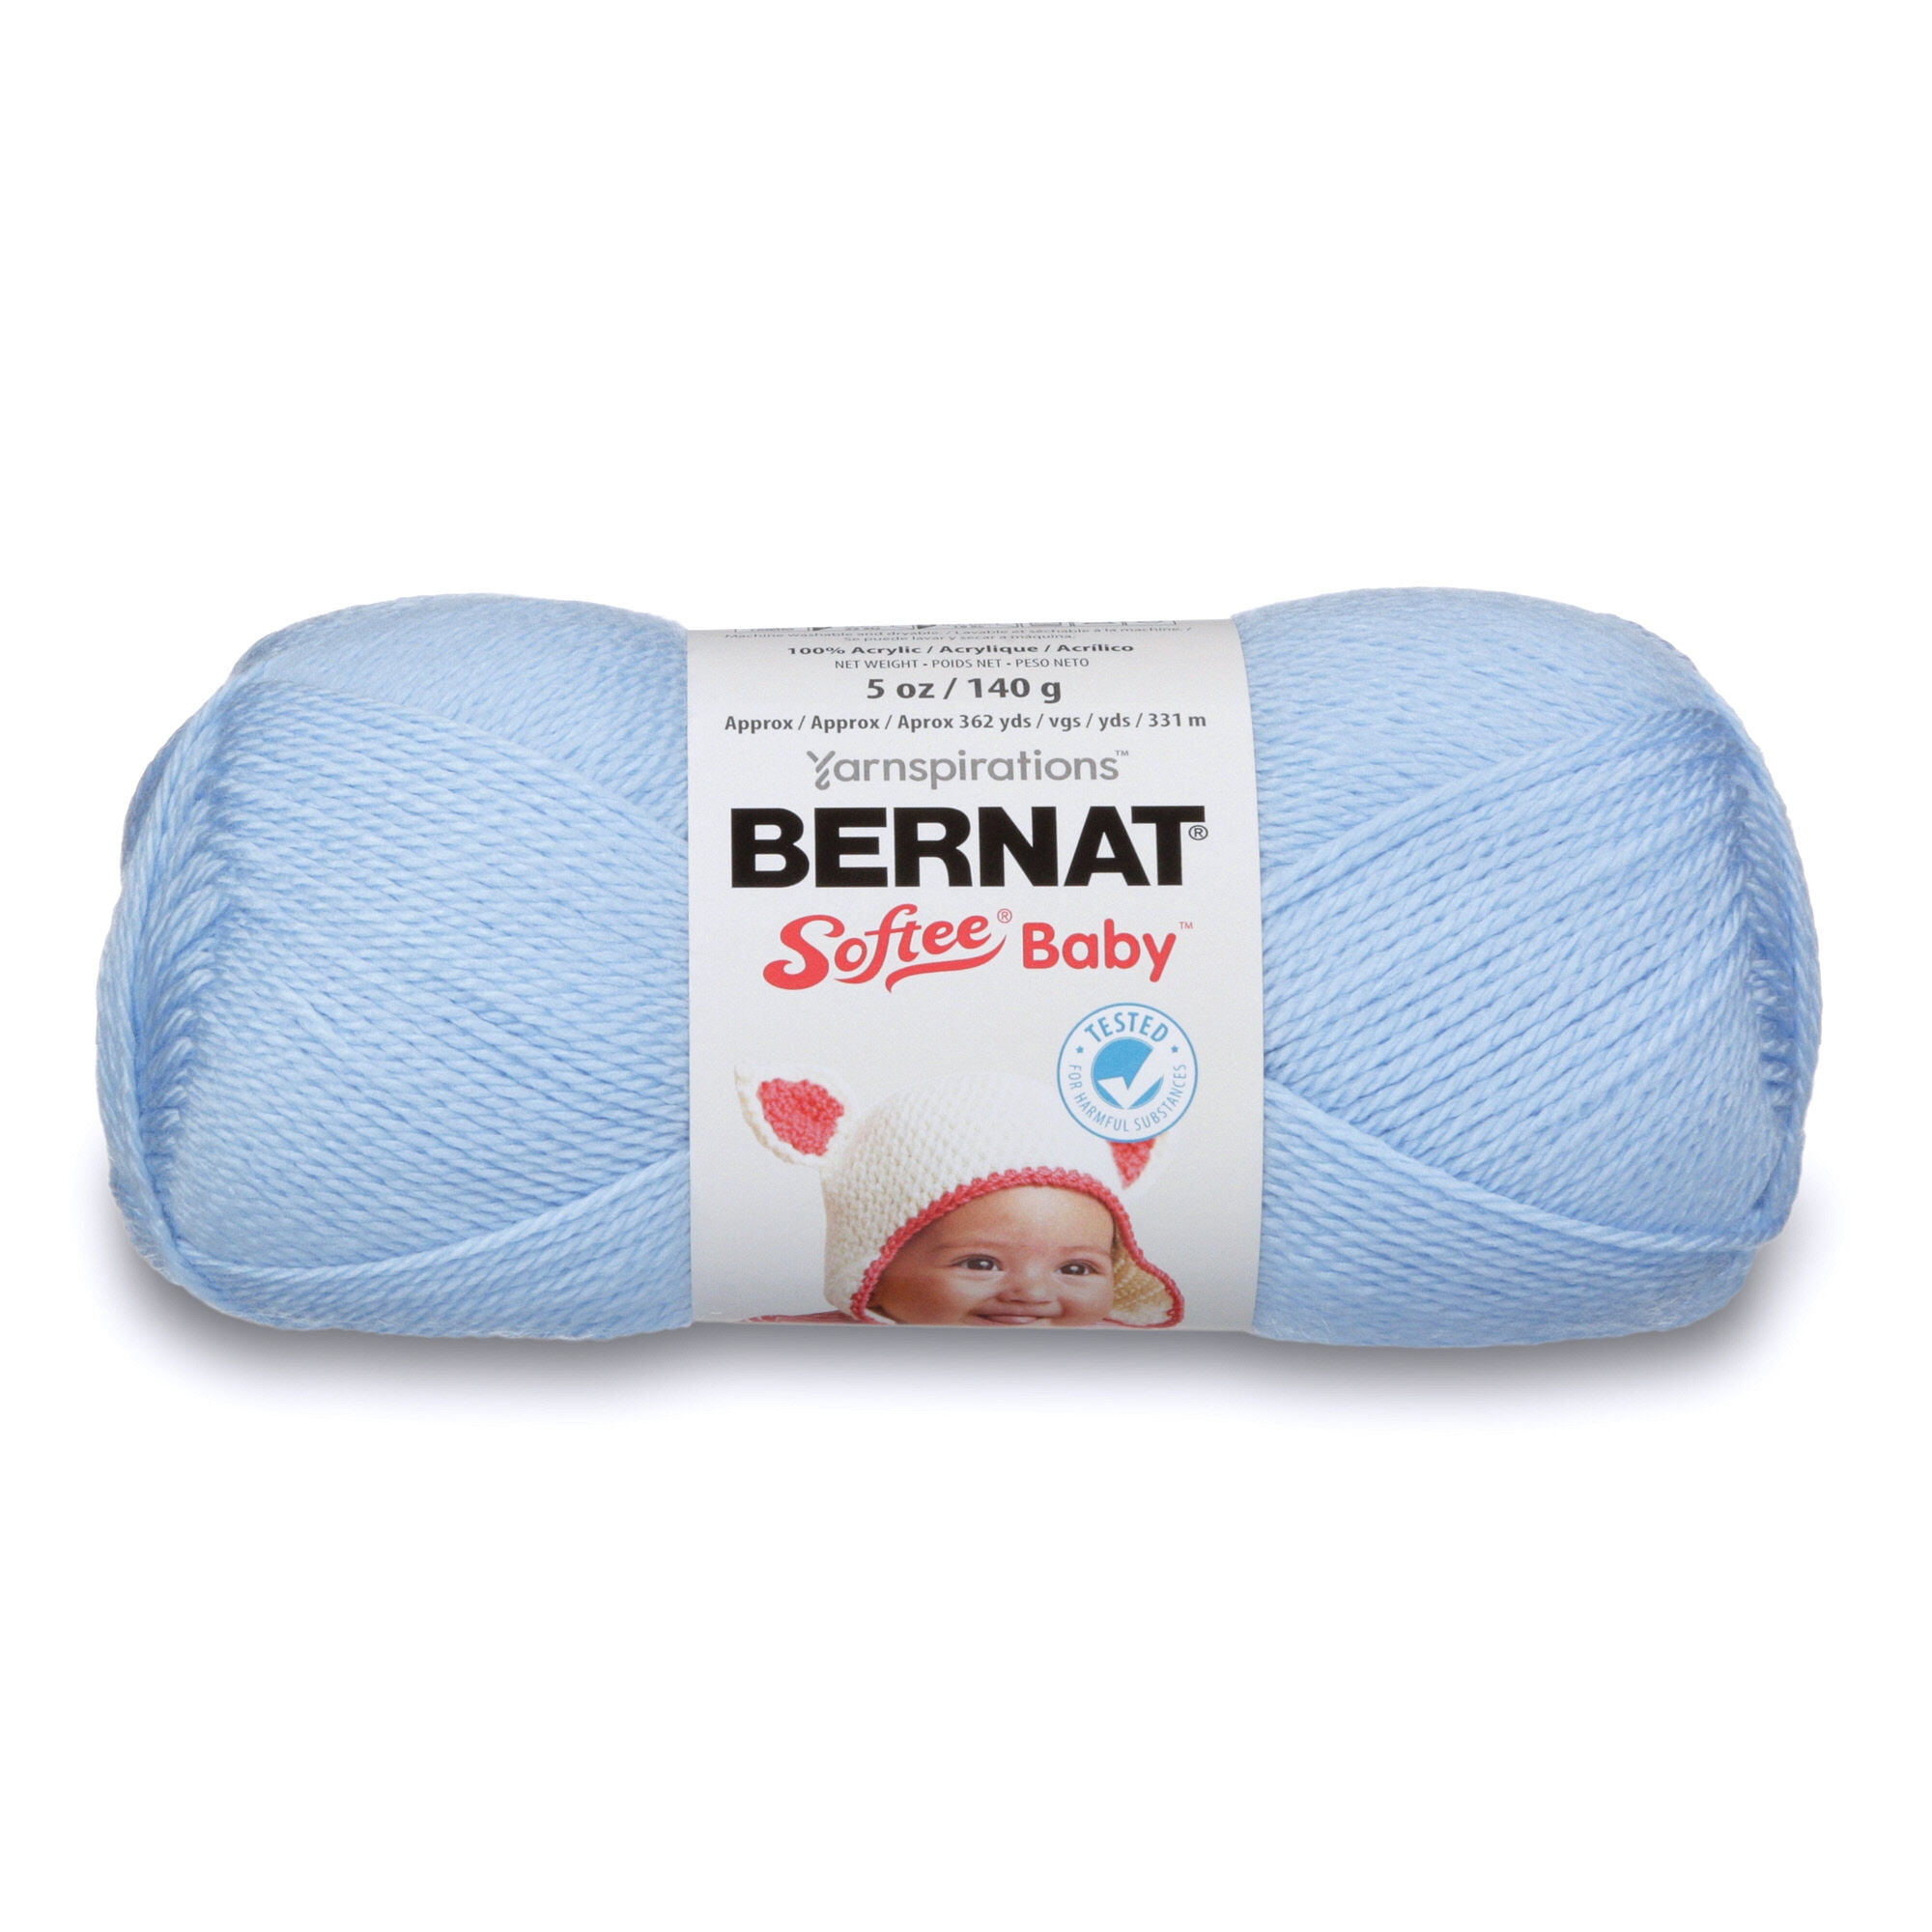 Bernat Softee Baby Yarn 3 Pack Bundle Includes 3 Patterns DK Light Worsted #3 Mint